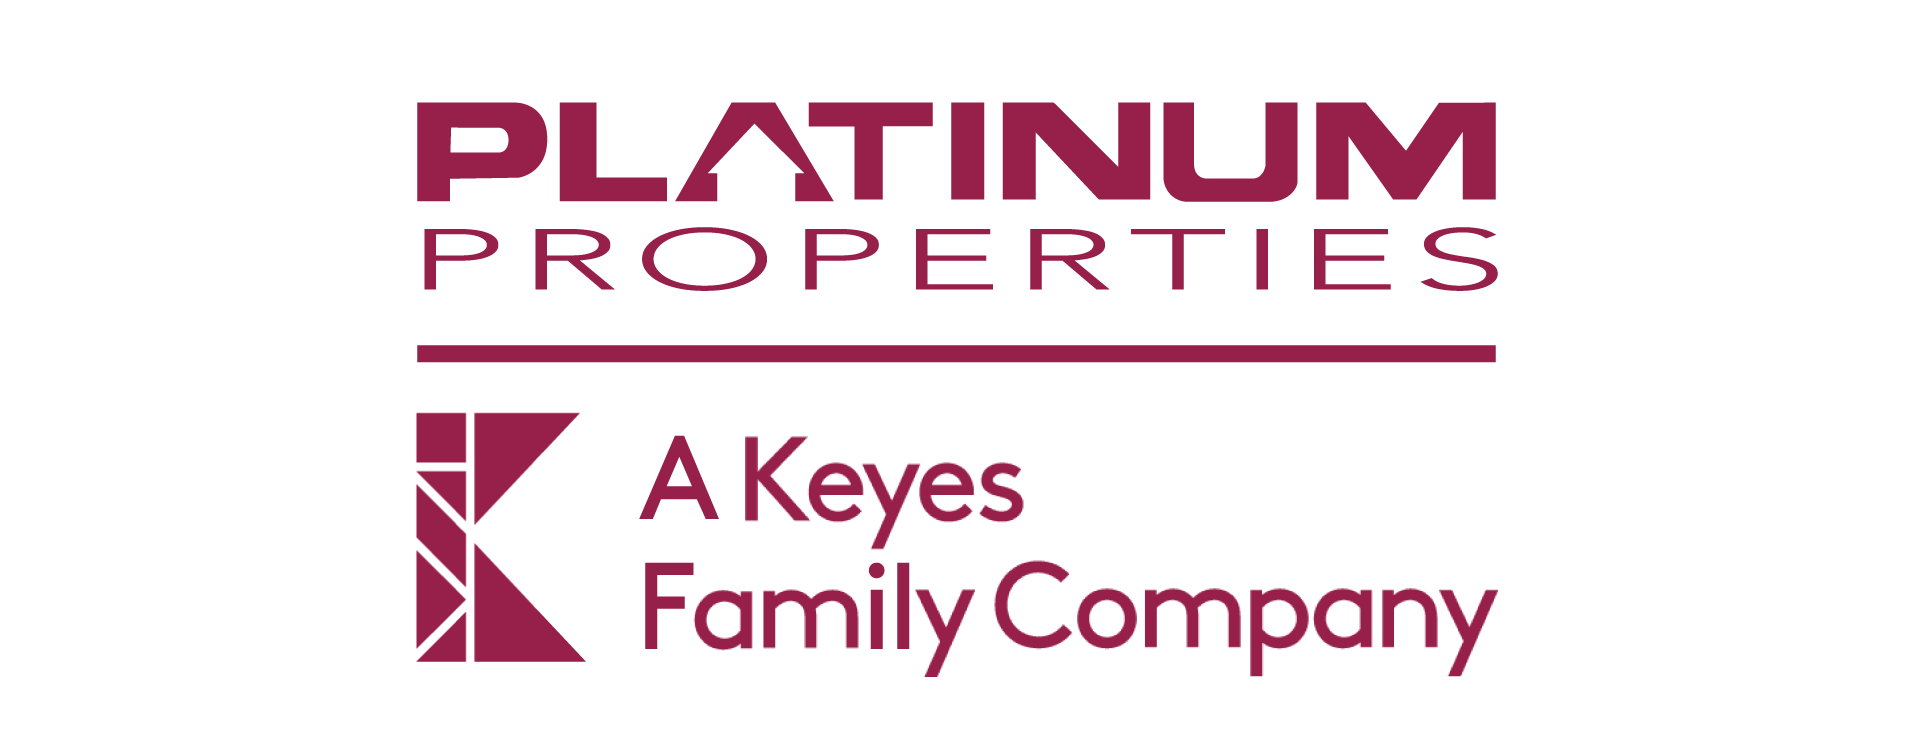 platinum properties a keyes company logo